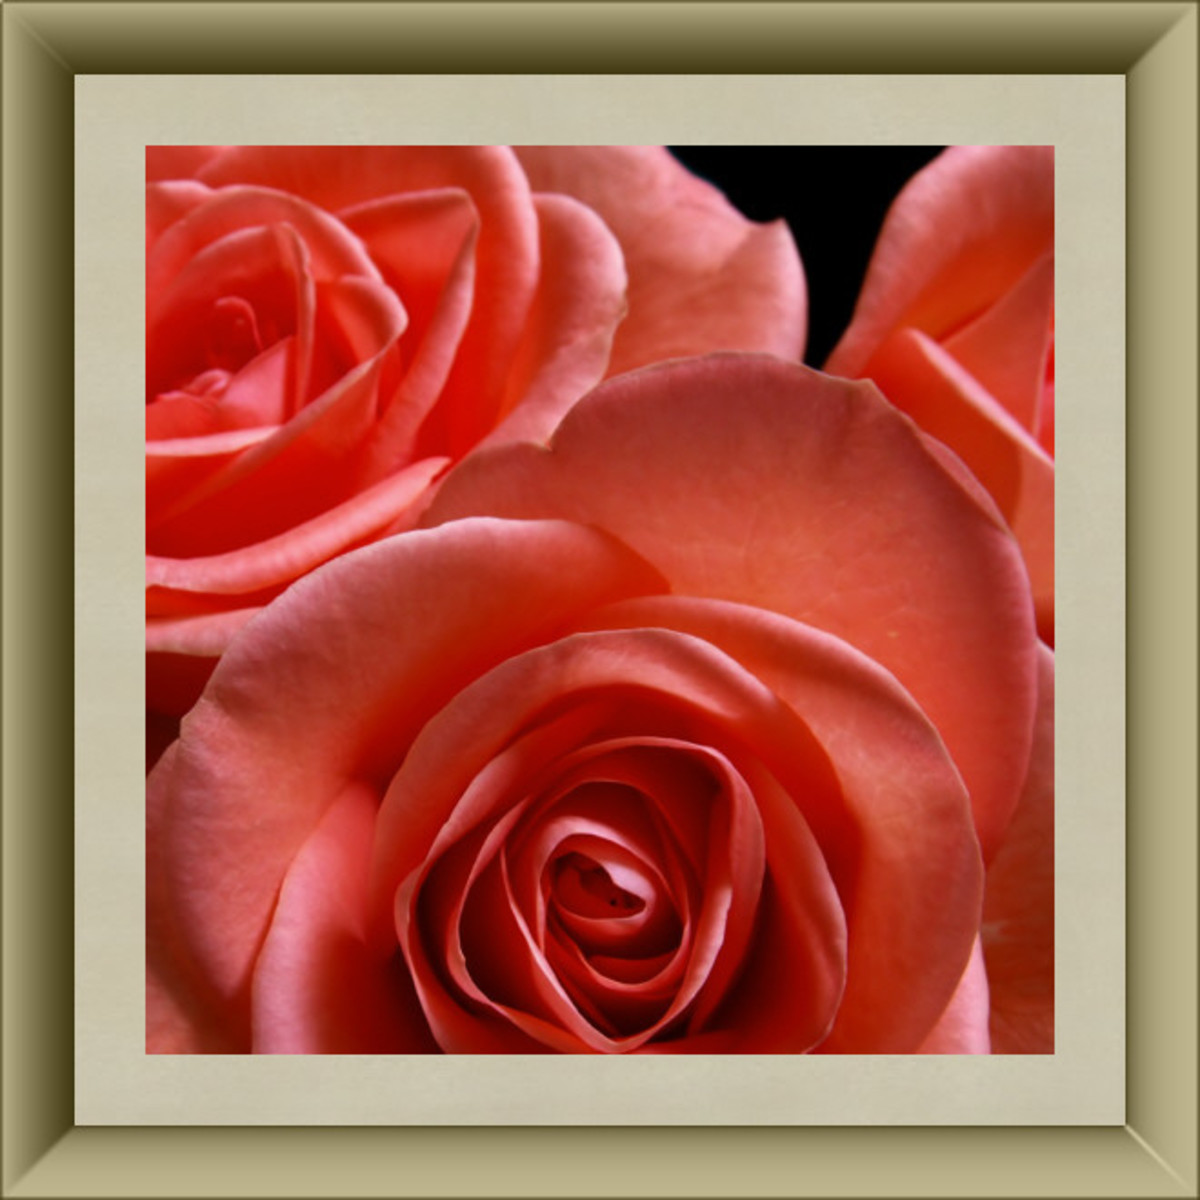 Rose blossoms